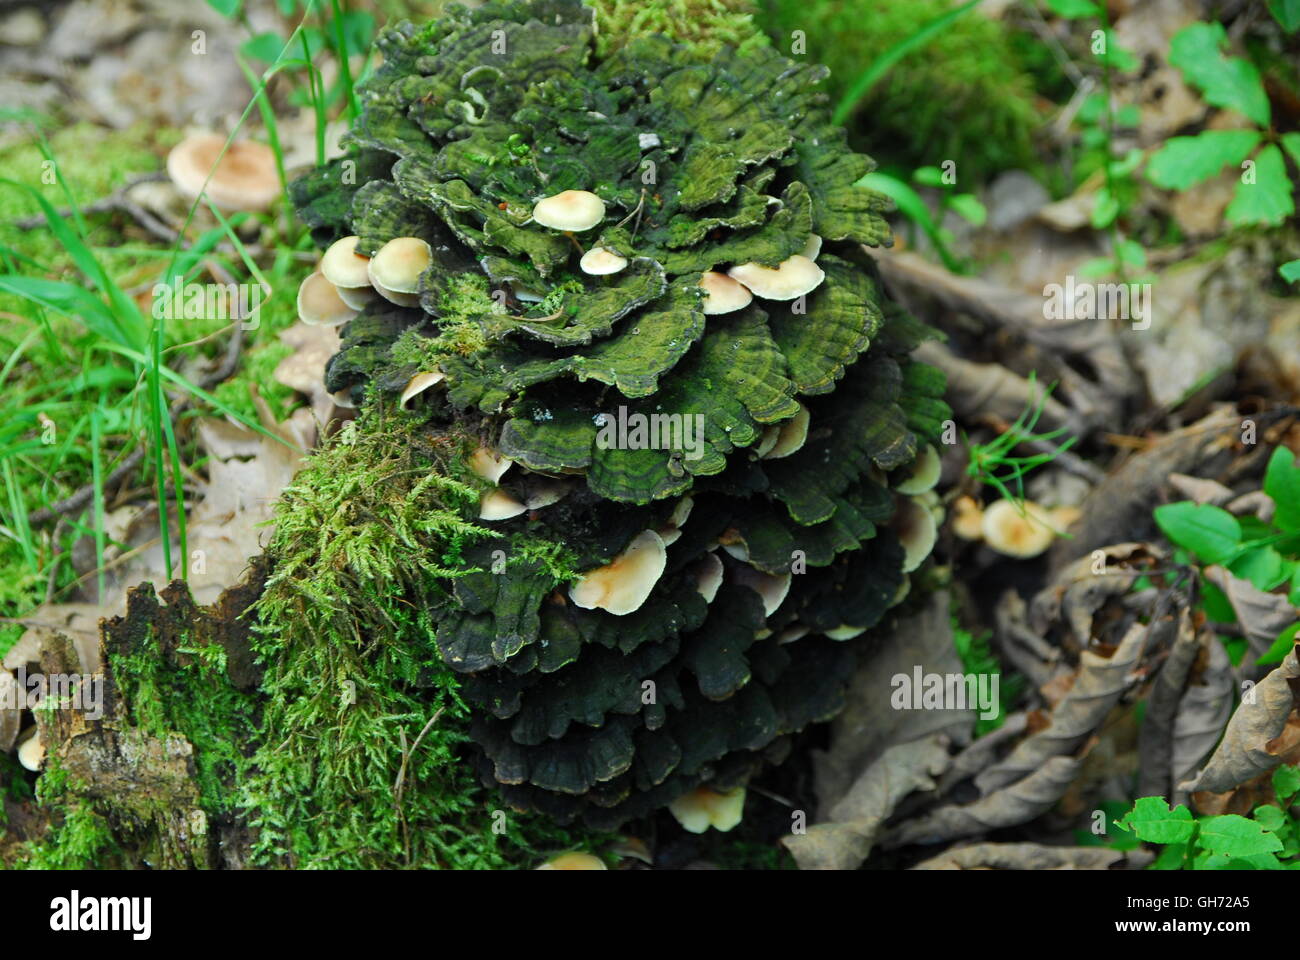 Fungus on a tree, heterobasidion annosum, green grass Stock Photo